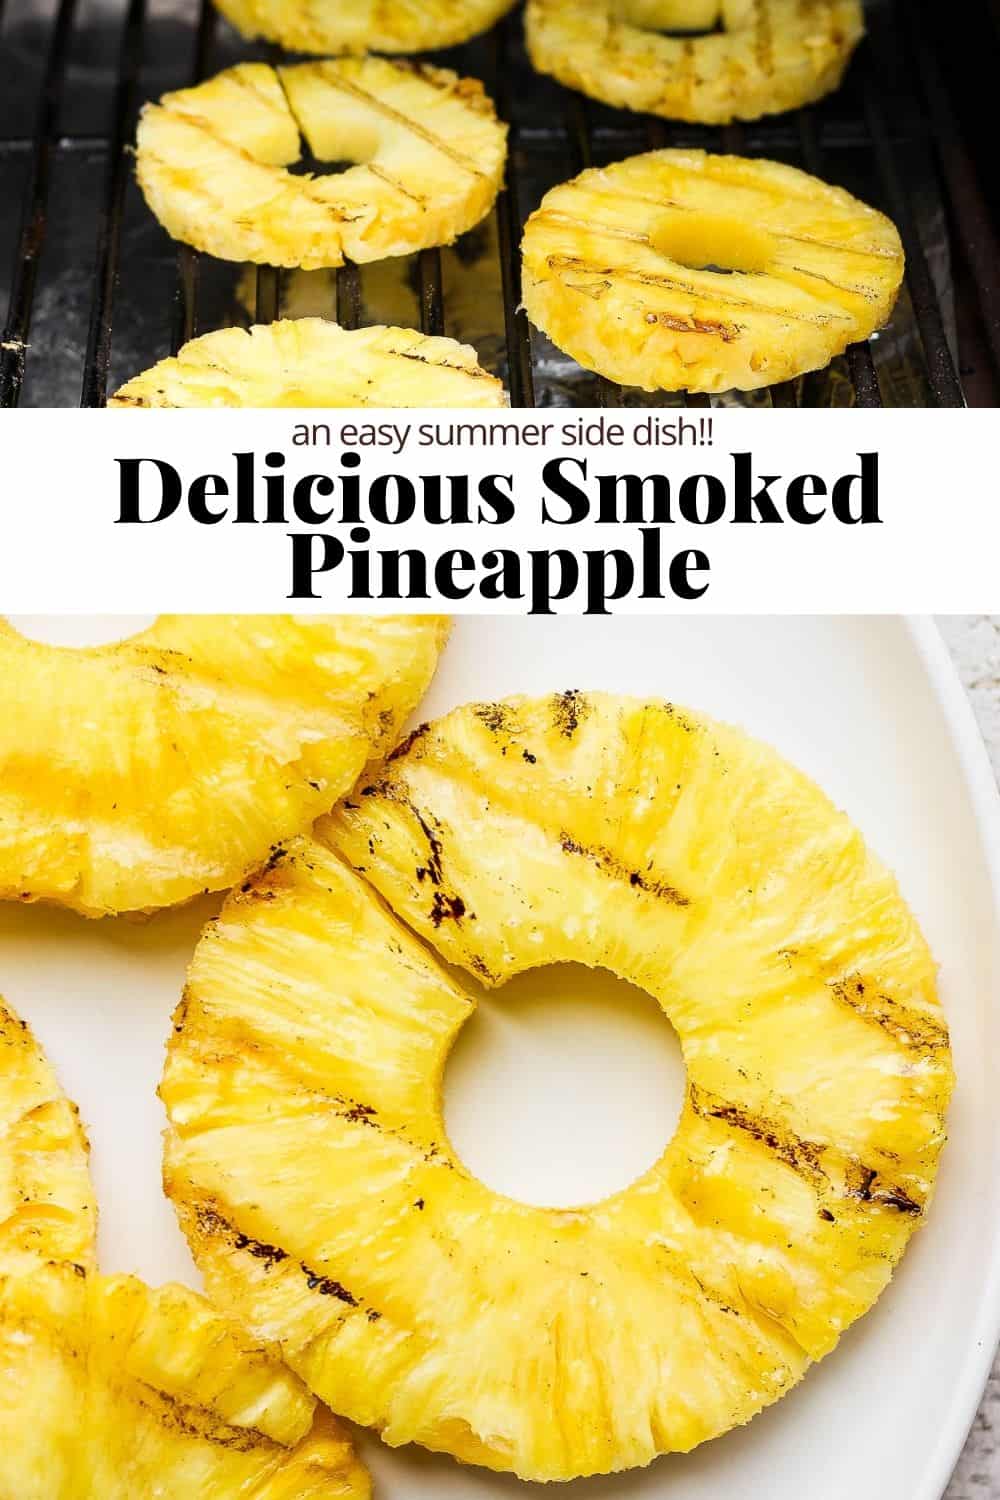 Pinterest image of smoked pineapple.